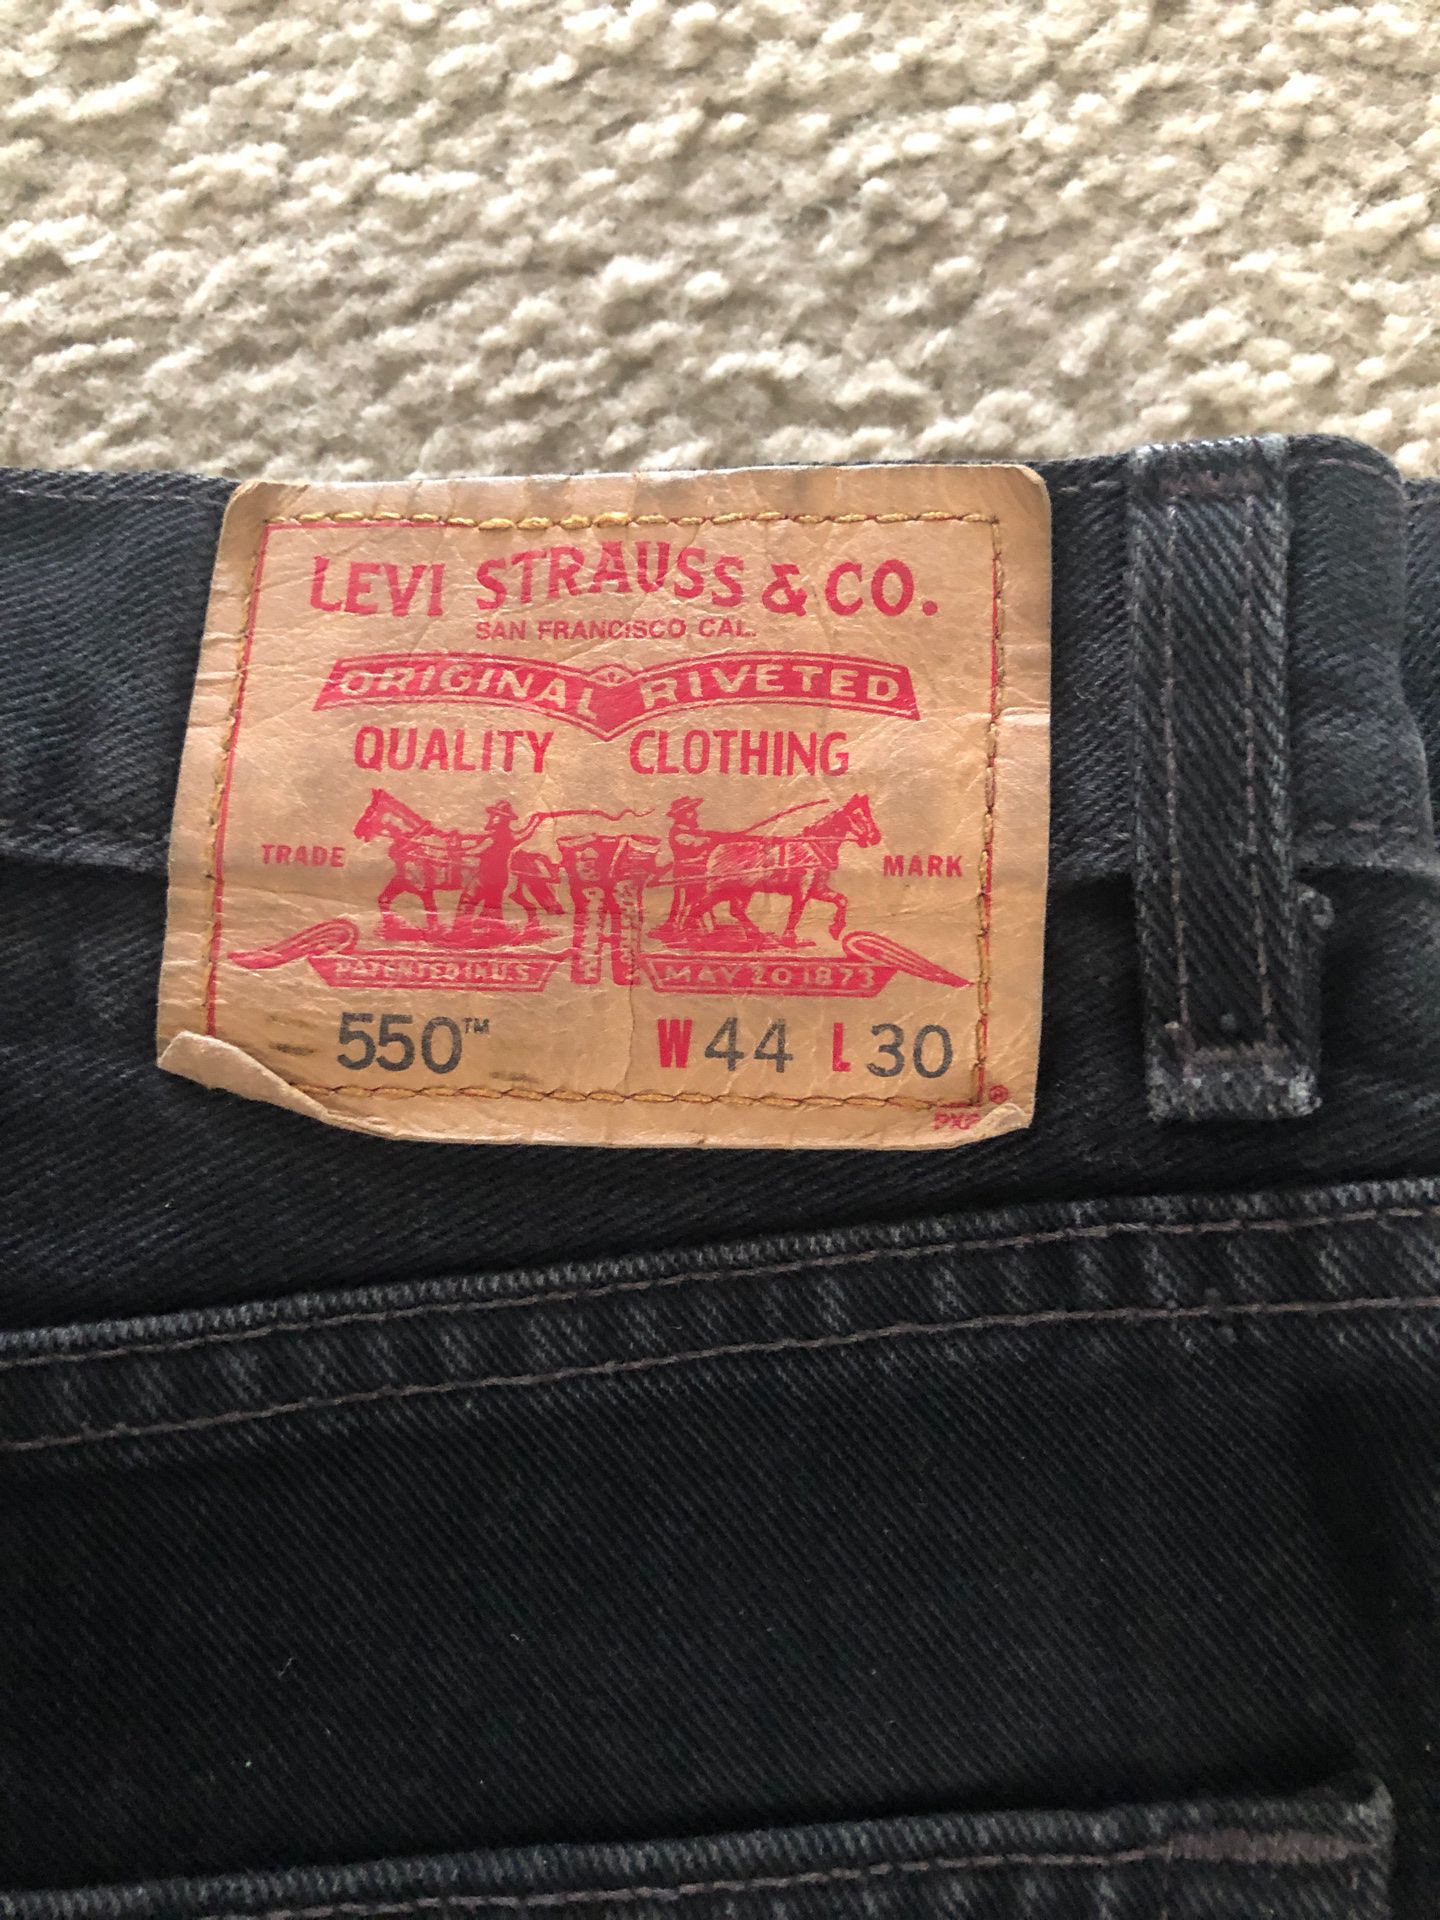 550 Levi Strauss black color jeans